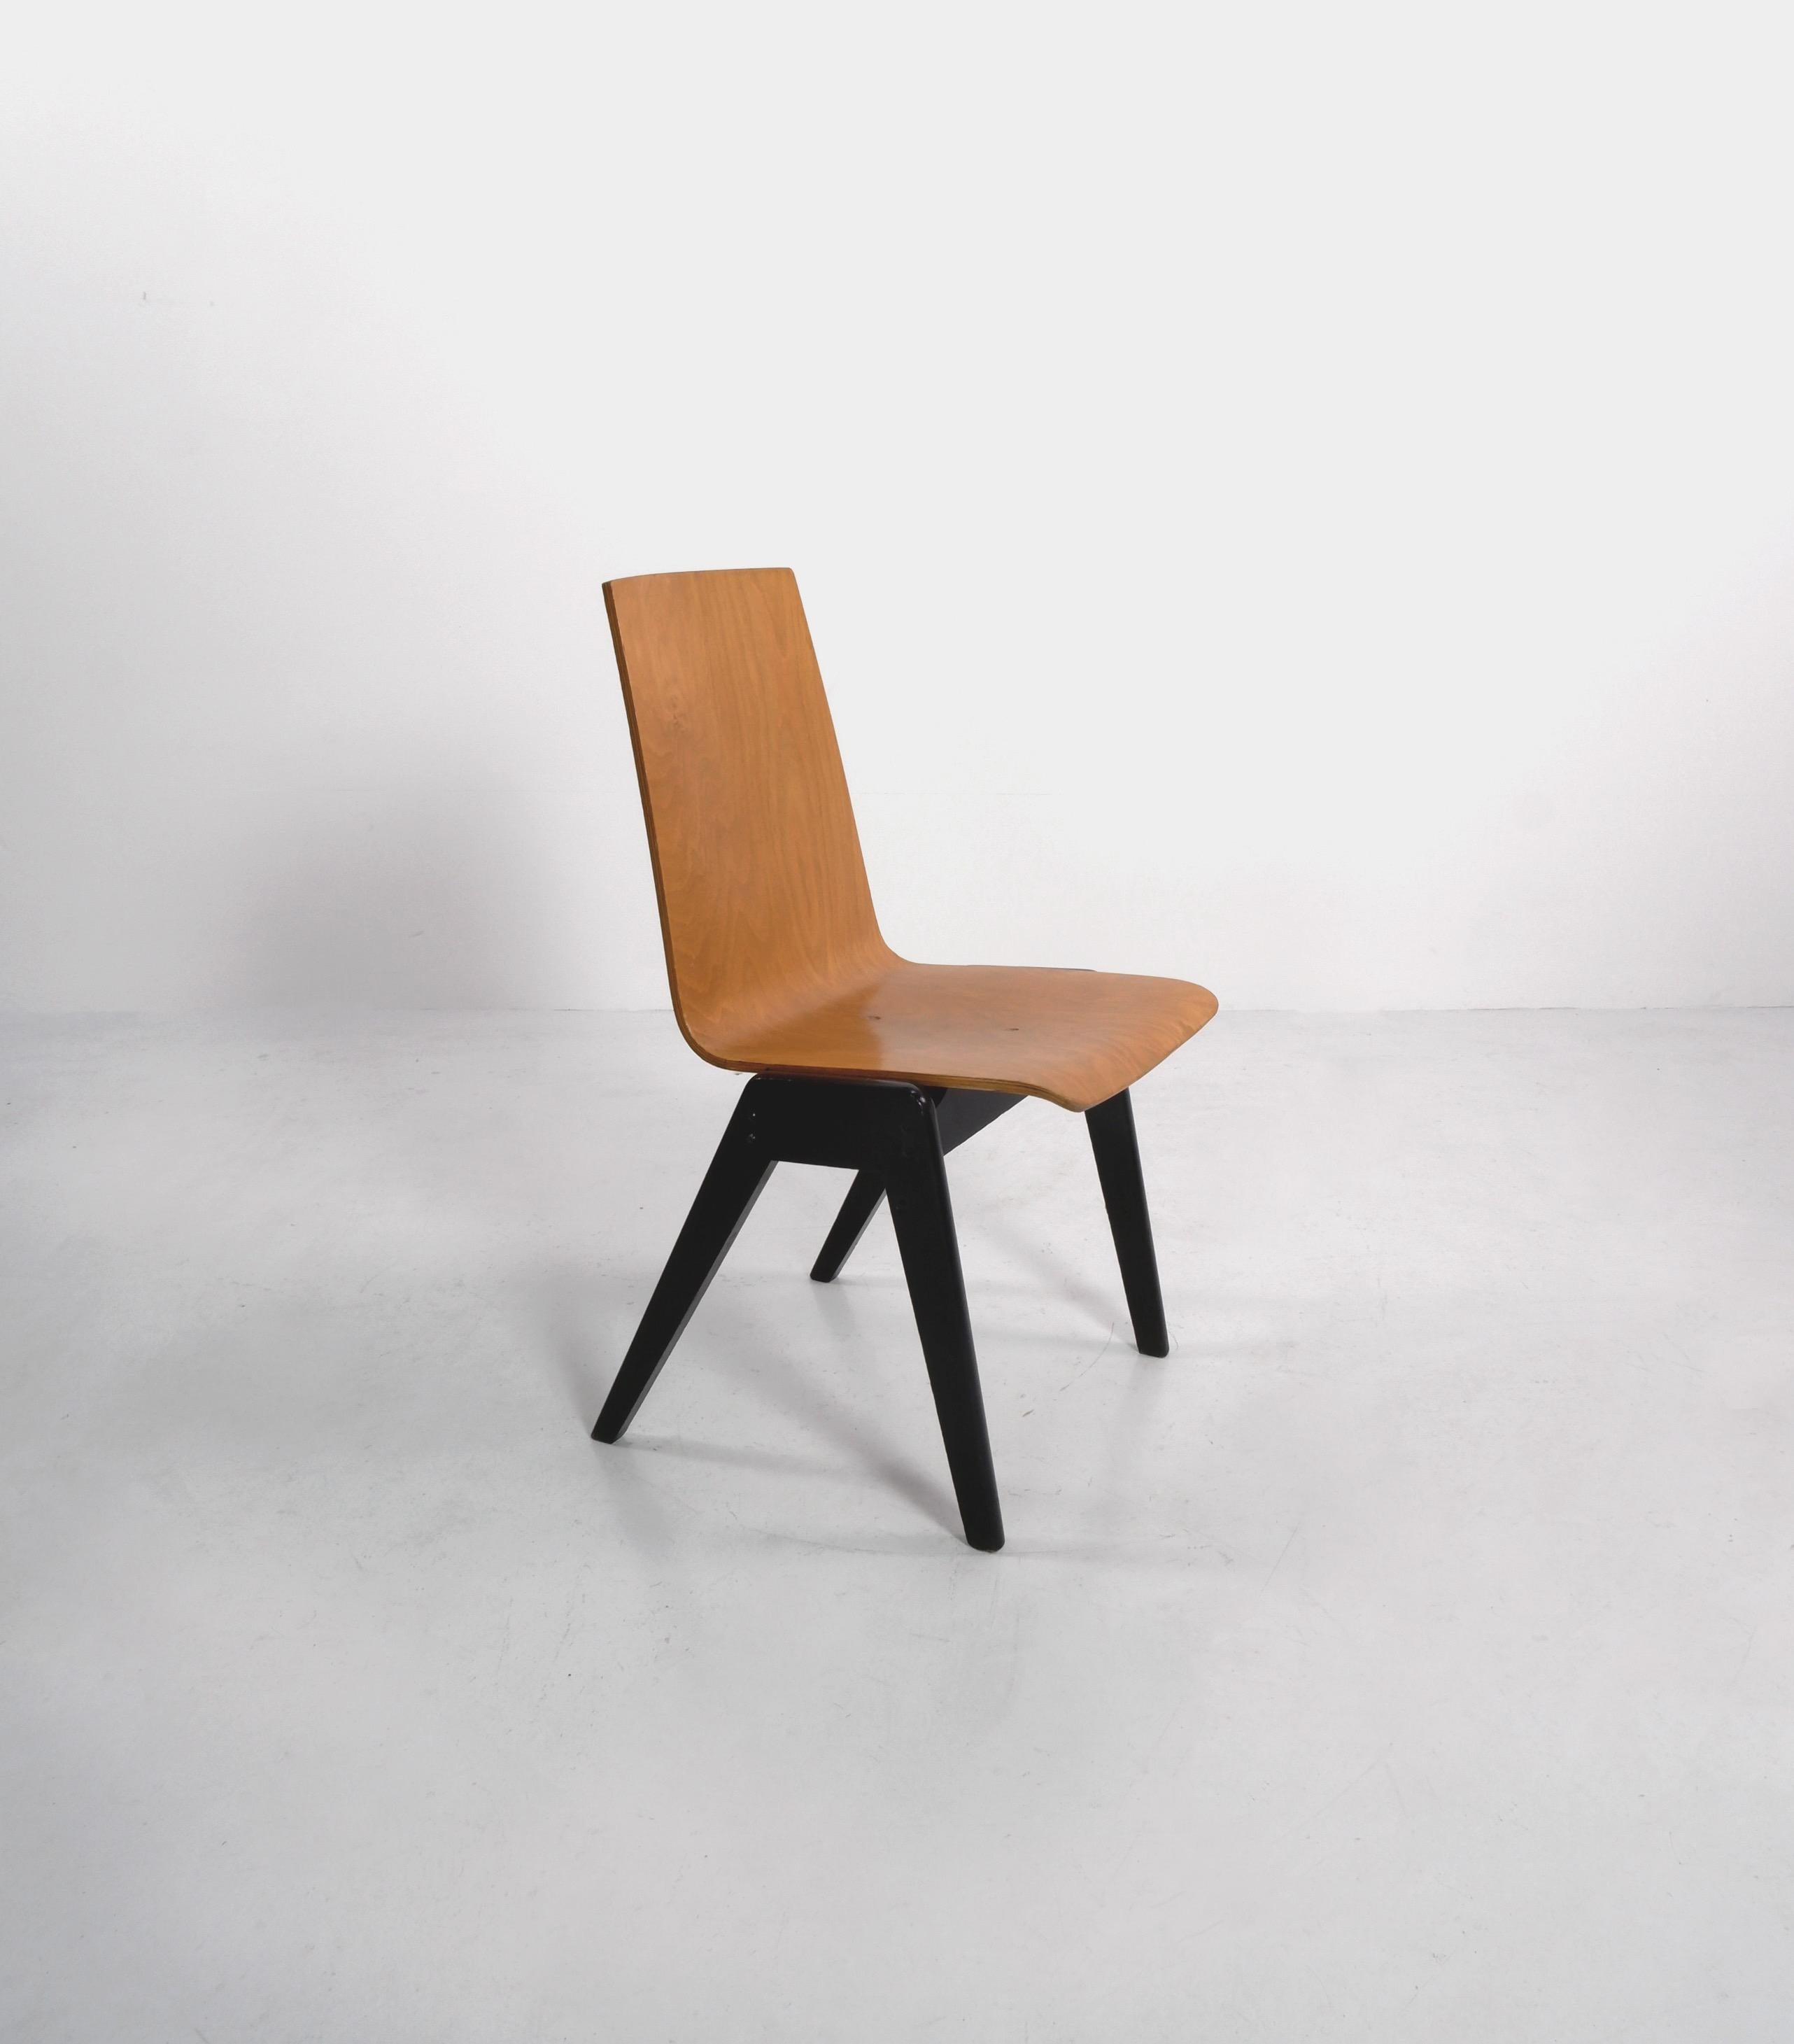 Mid-Century Modern Plywood Stacking Chairs attrb. Roland Rainer, c.1950